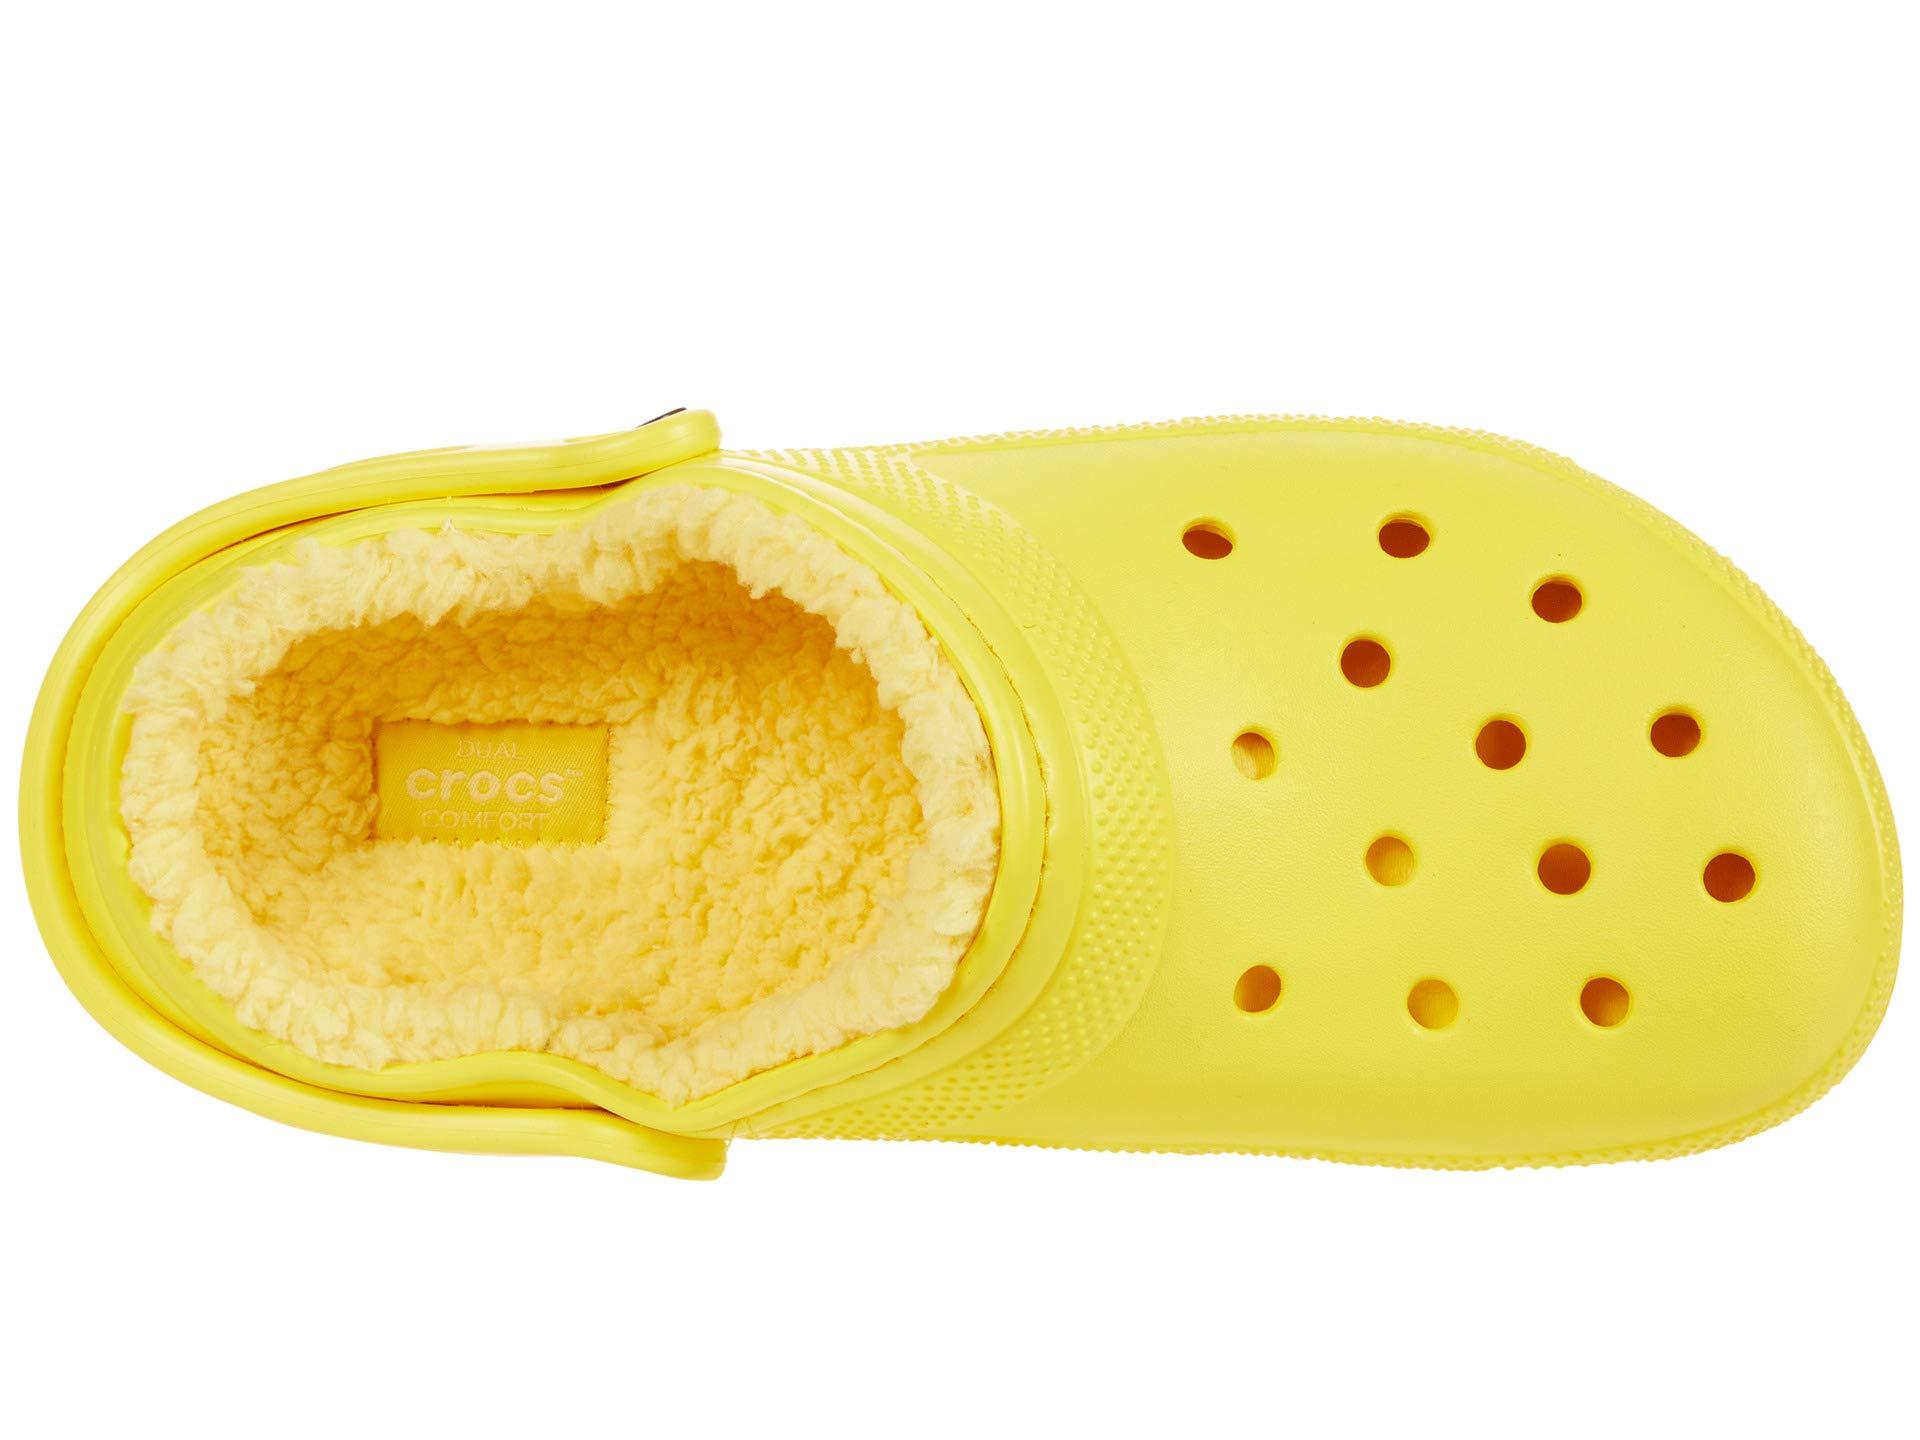 crocs yellow with fur